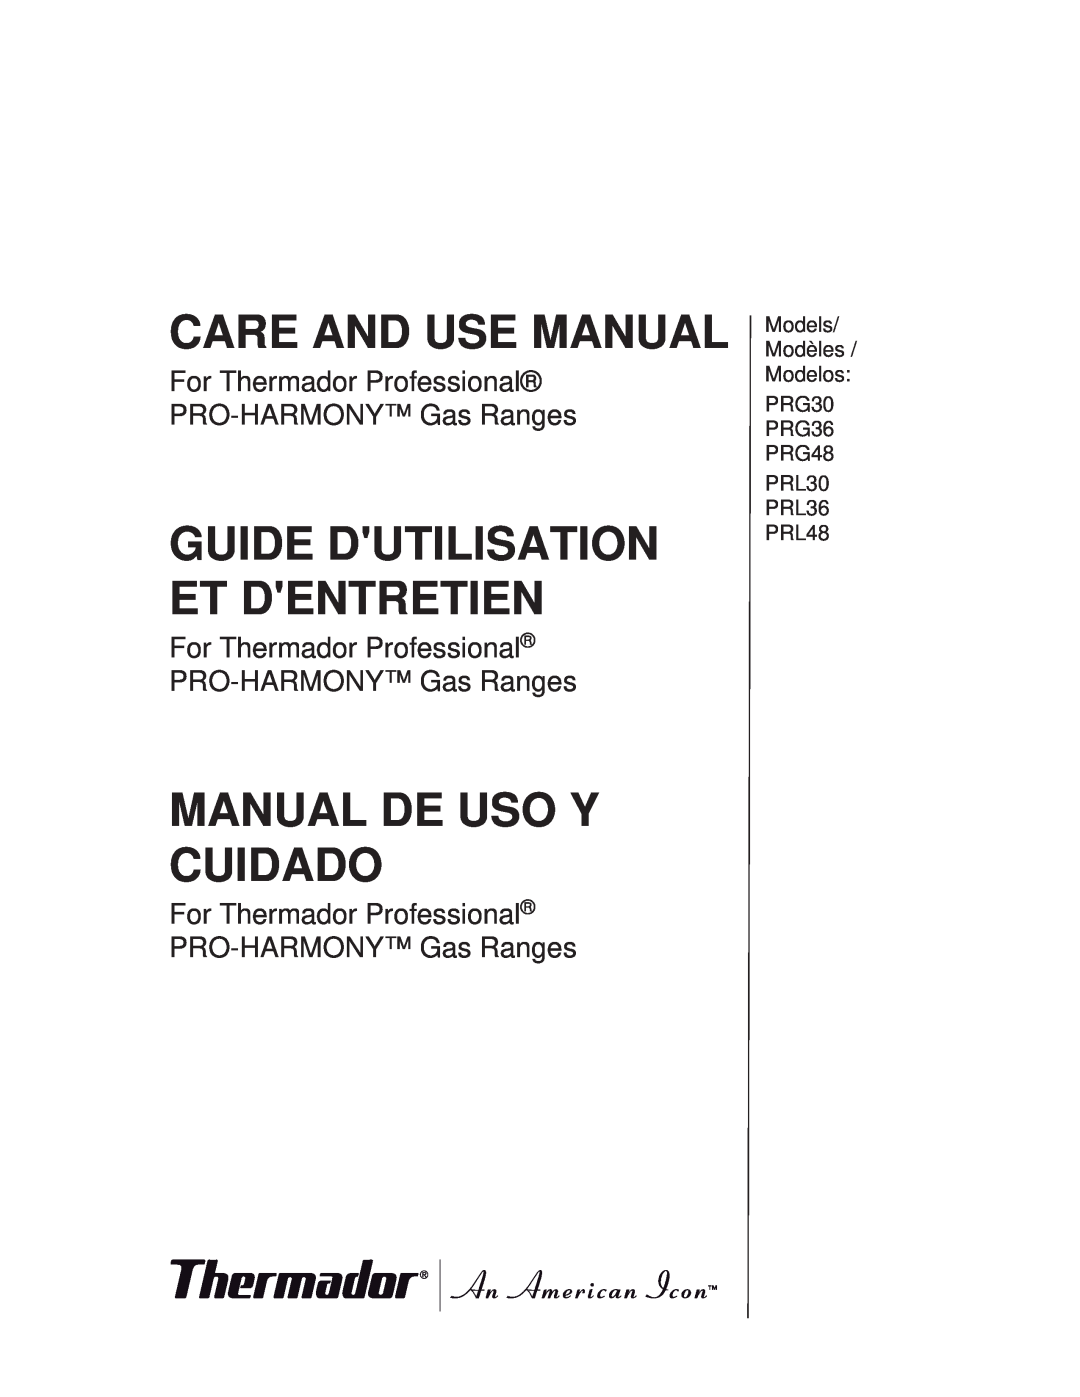 Thermador PRG30, PRL36, PRL30 manual Care And Use Manual, Guide Dutilisation Et Dentretien, Manual De Uso Y Cuidado 